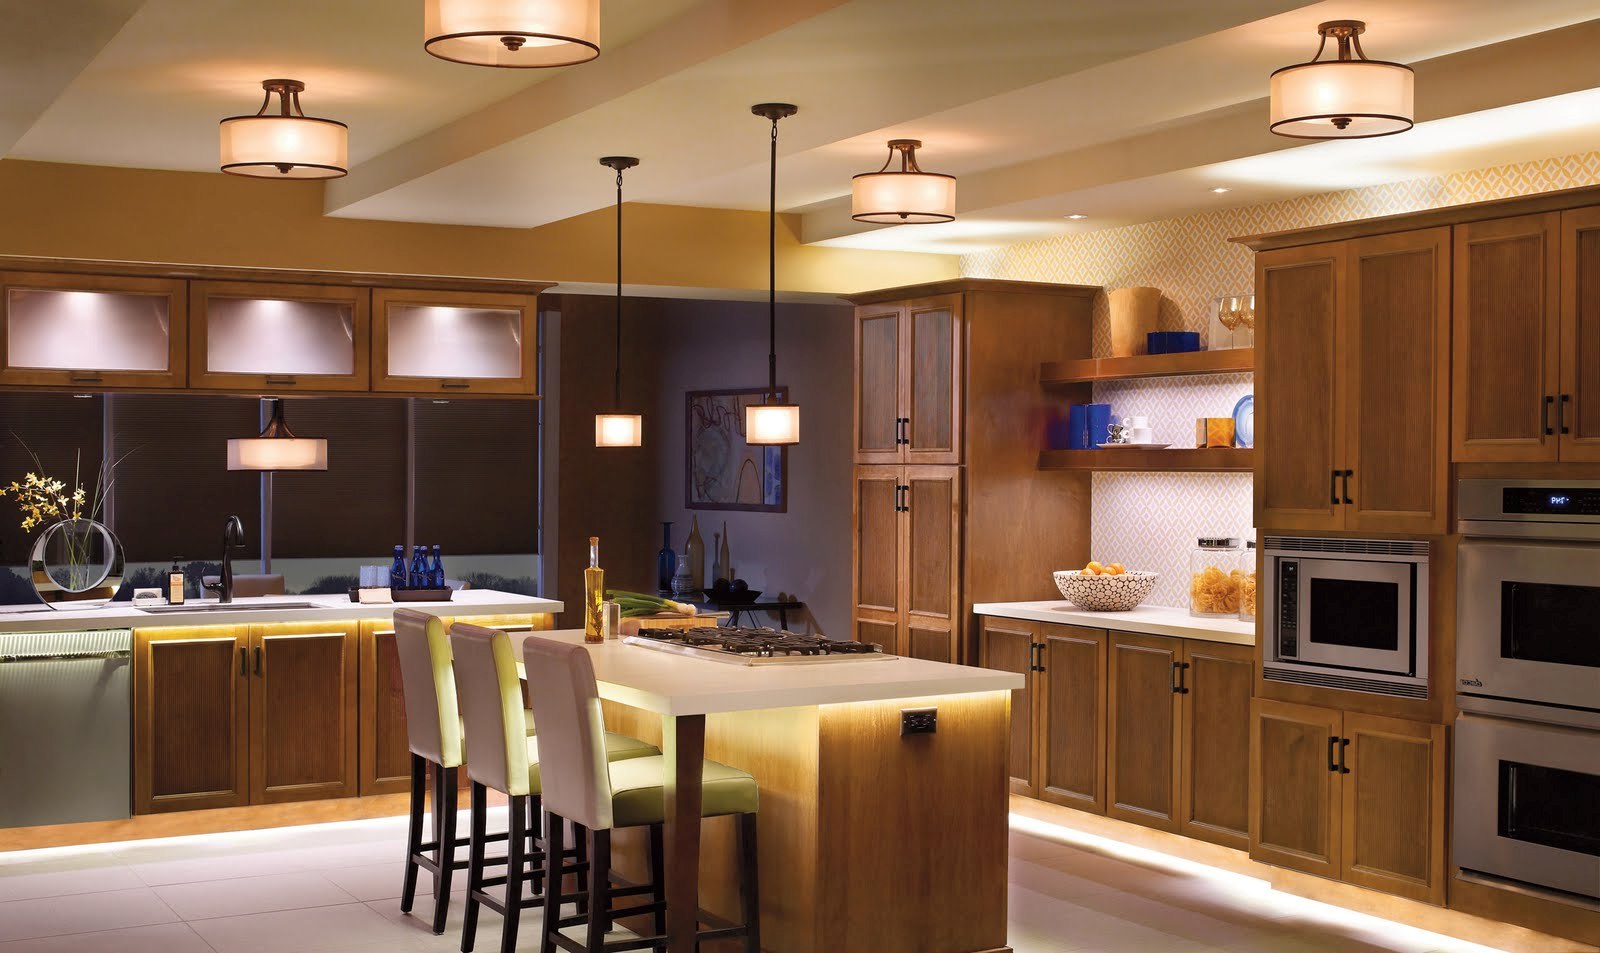 Get large amount of illumination with Led kitchen ceiling lights